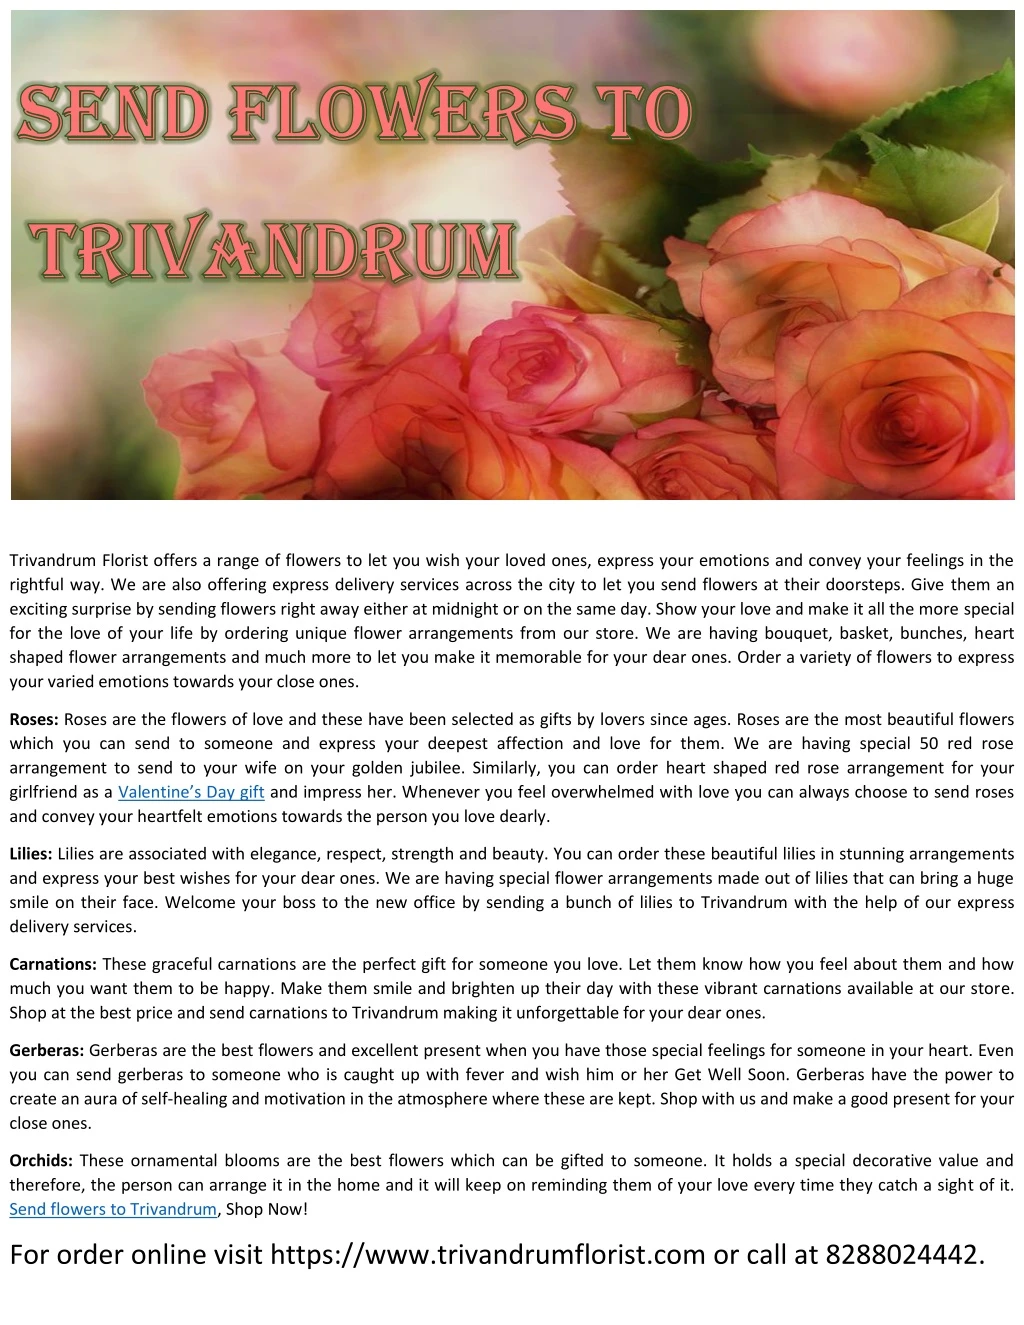 trivandrum florist offers a range of flowers